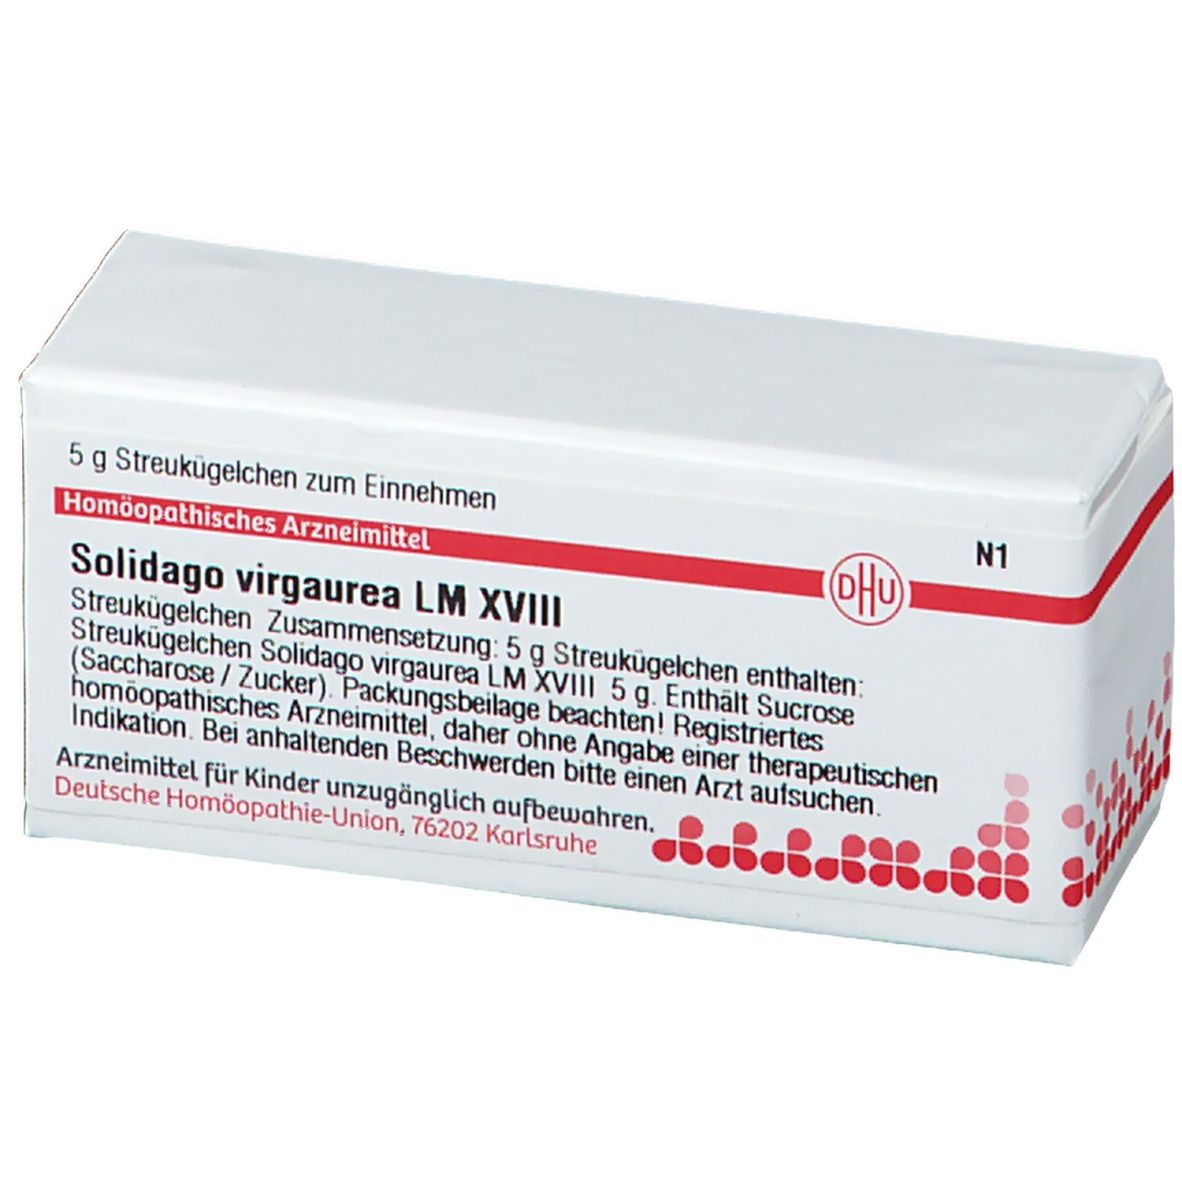 DHU Solidago Virgaurea LM XVIII